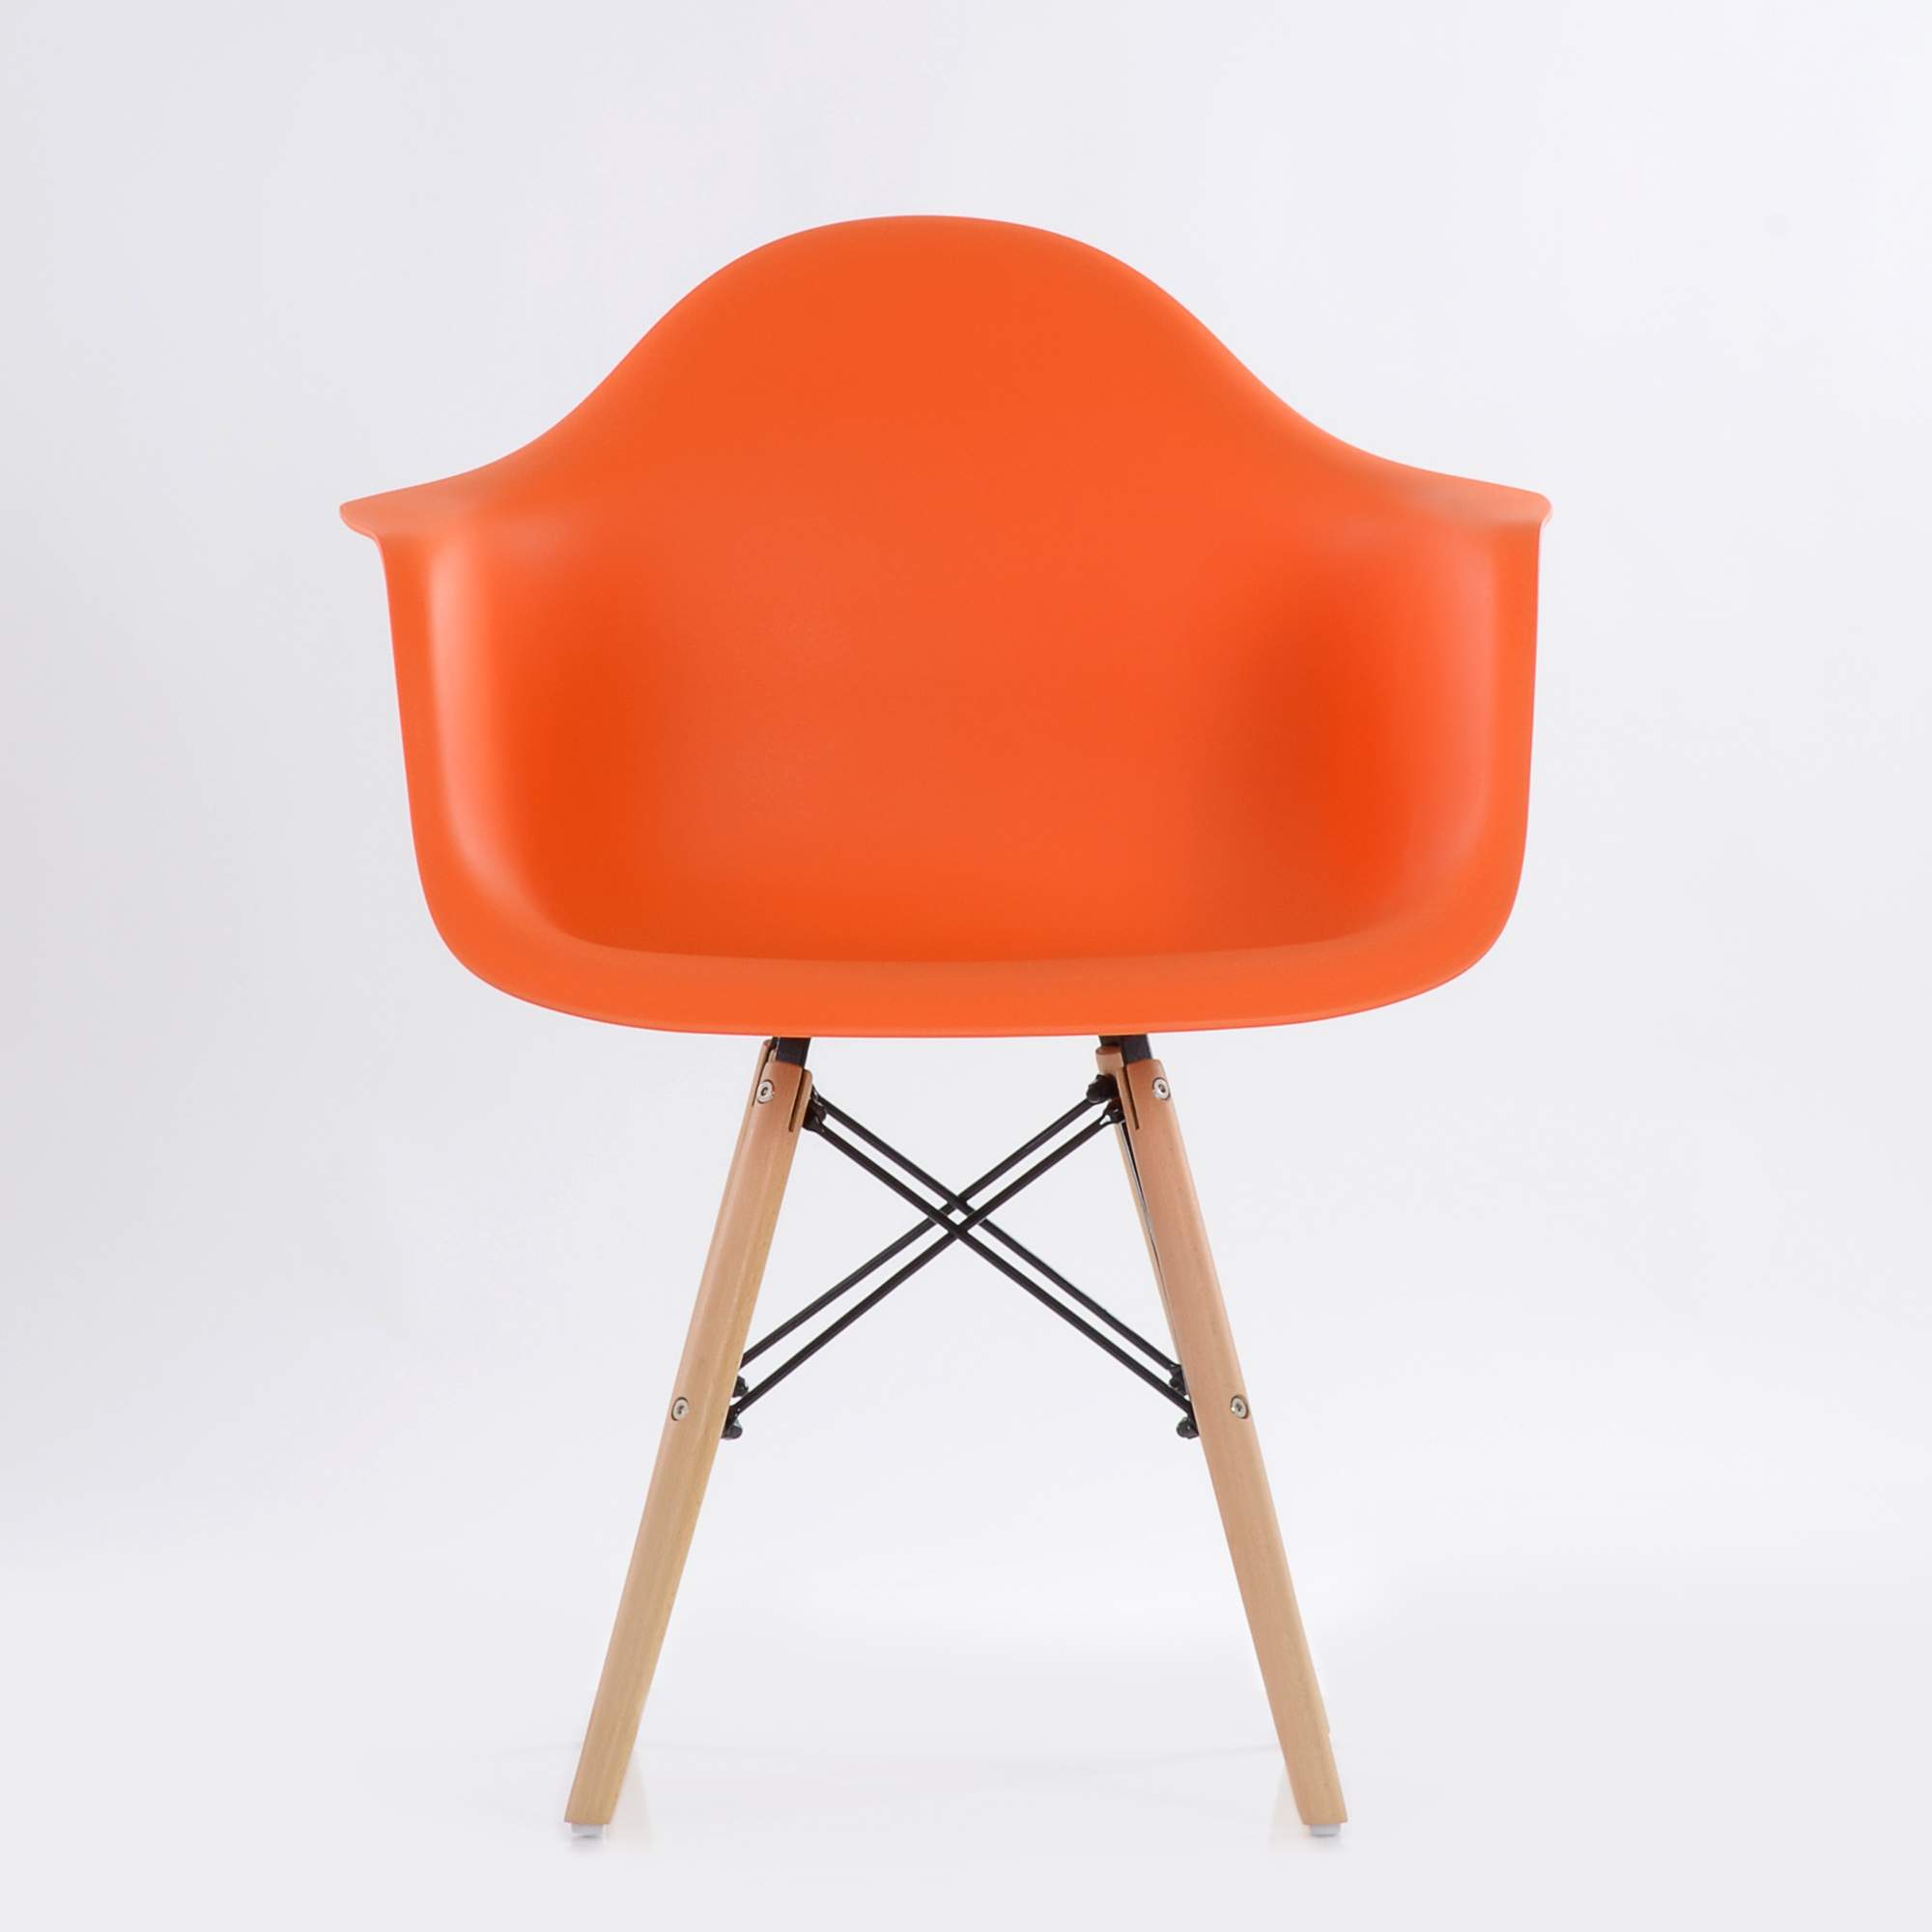 Кресло Barneo N-14 WoodMold оранжевый